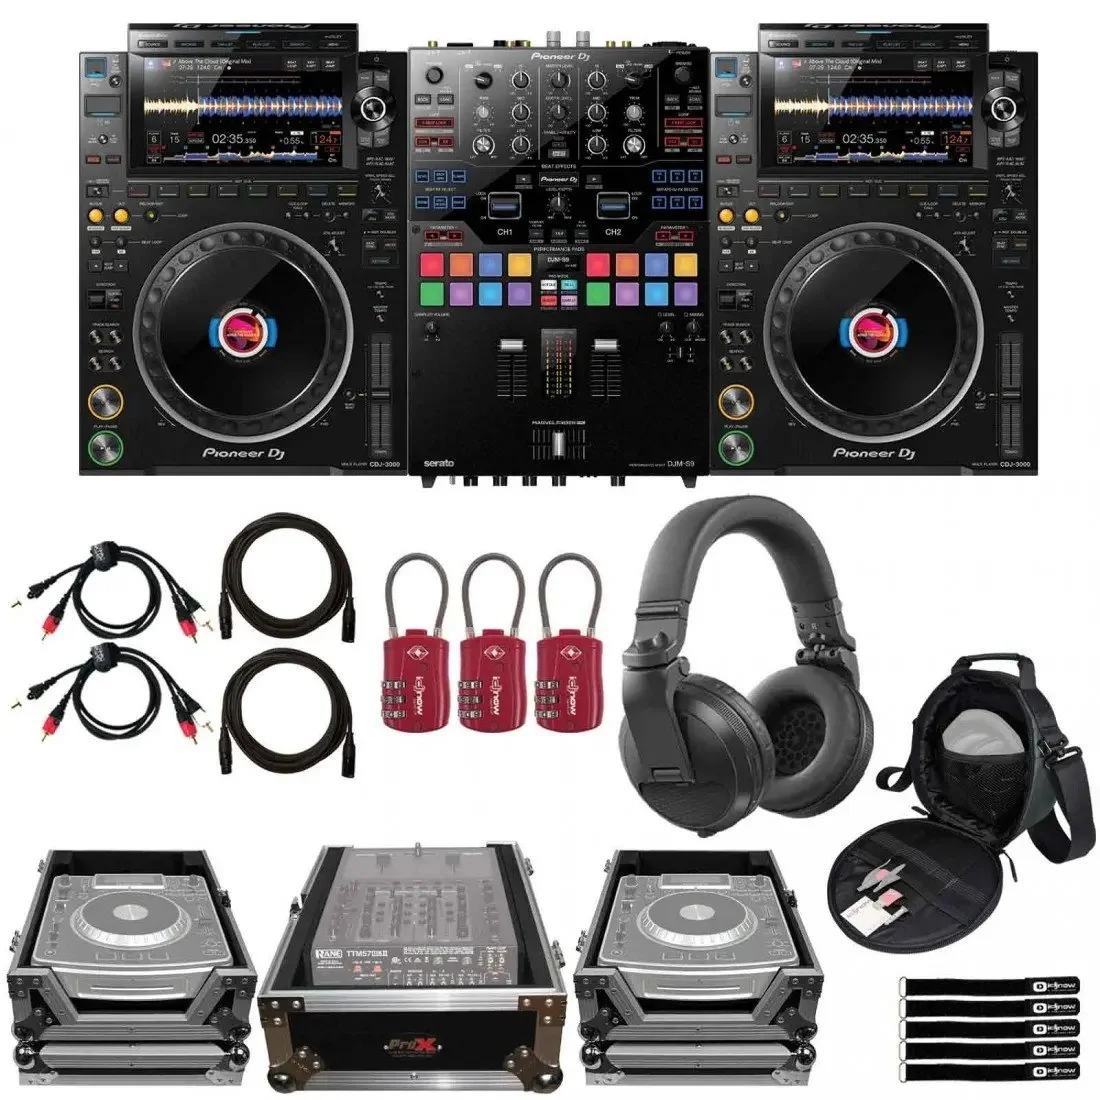 

PROMO SALES DISCOUNT ON Discount Sales Pion-eer DJ DJM-S9 Professional 2-Channel Serato Battle Mixer